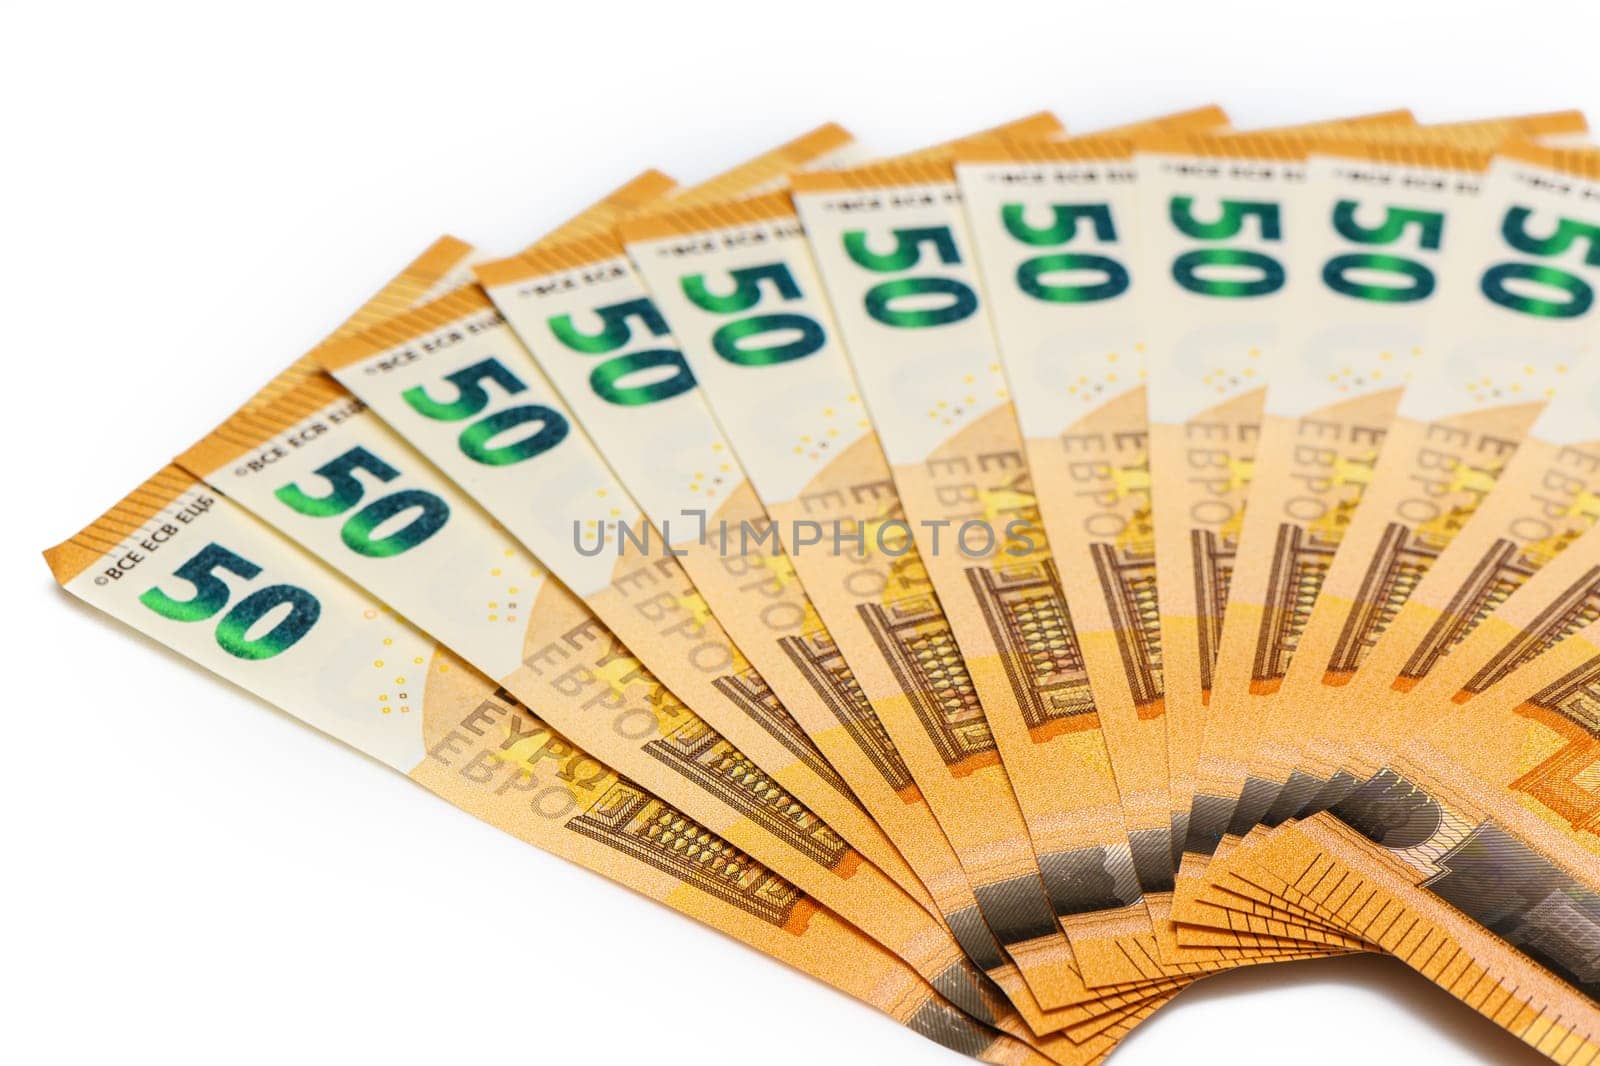 European money cash with 50 euros bills, top view by Mixa74